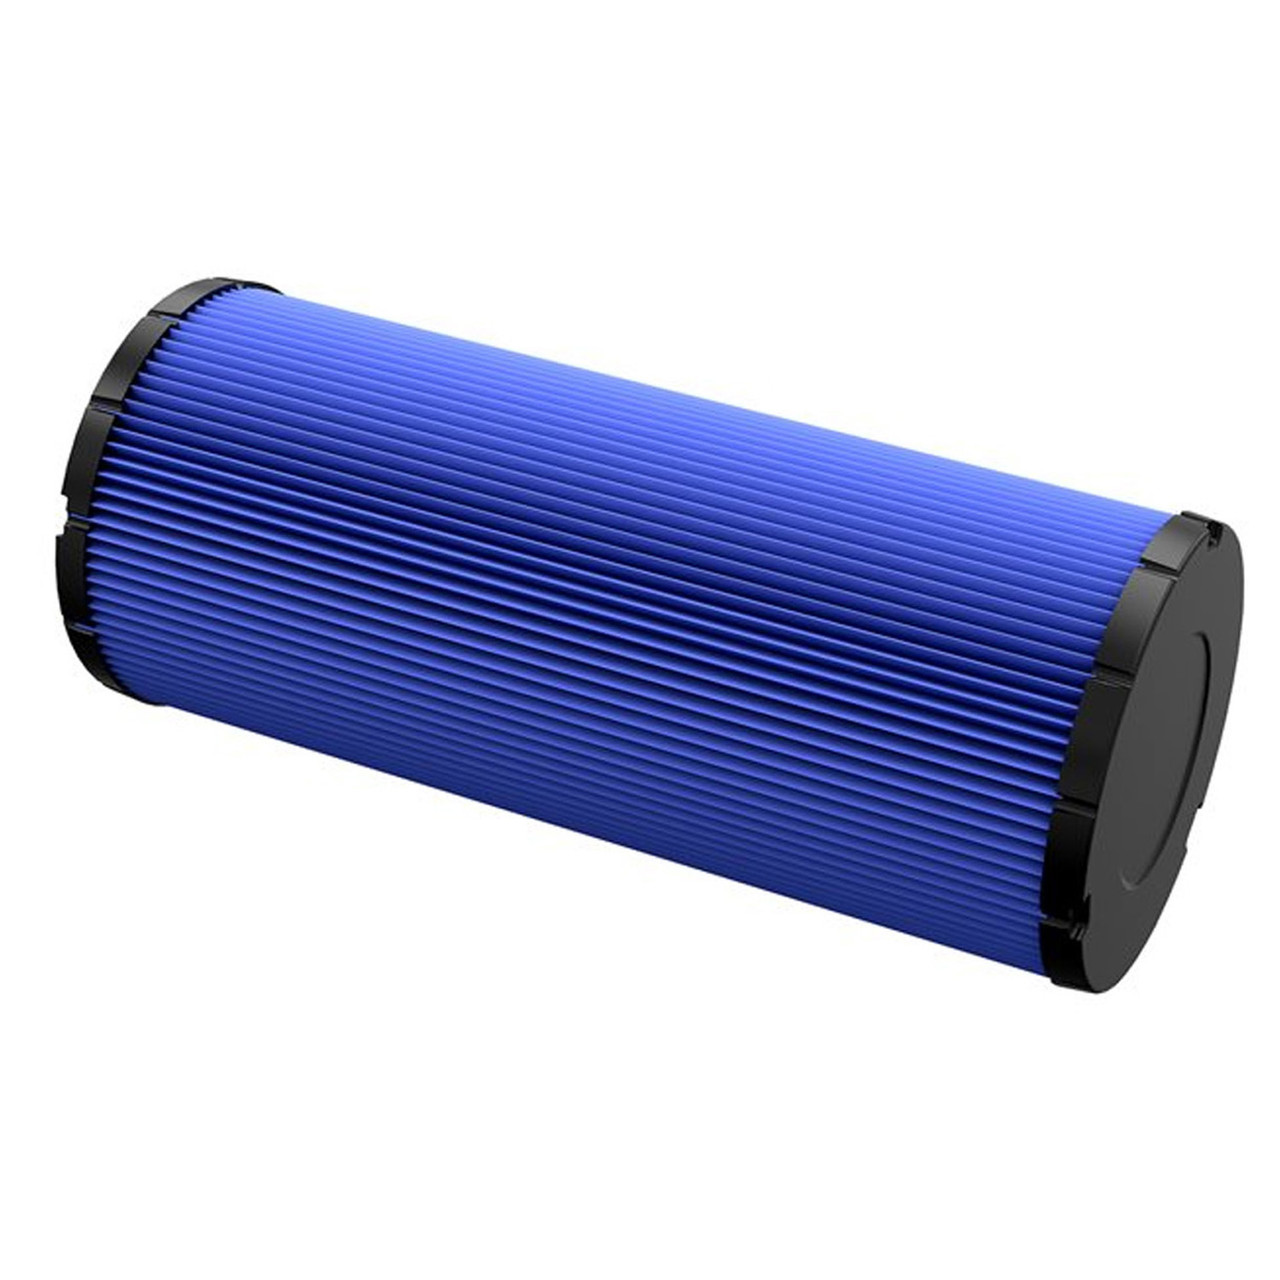 Polaris New OEM Razor RZR Premium Filter Kit by Donaldson, Blue, 2882233